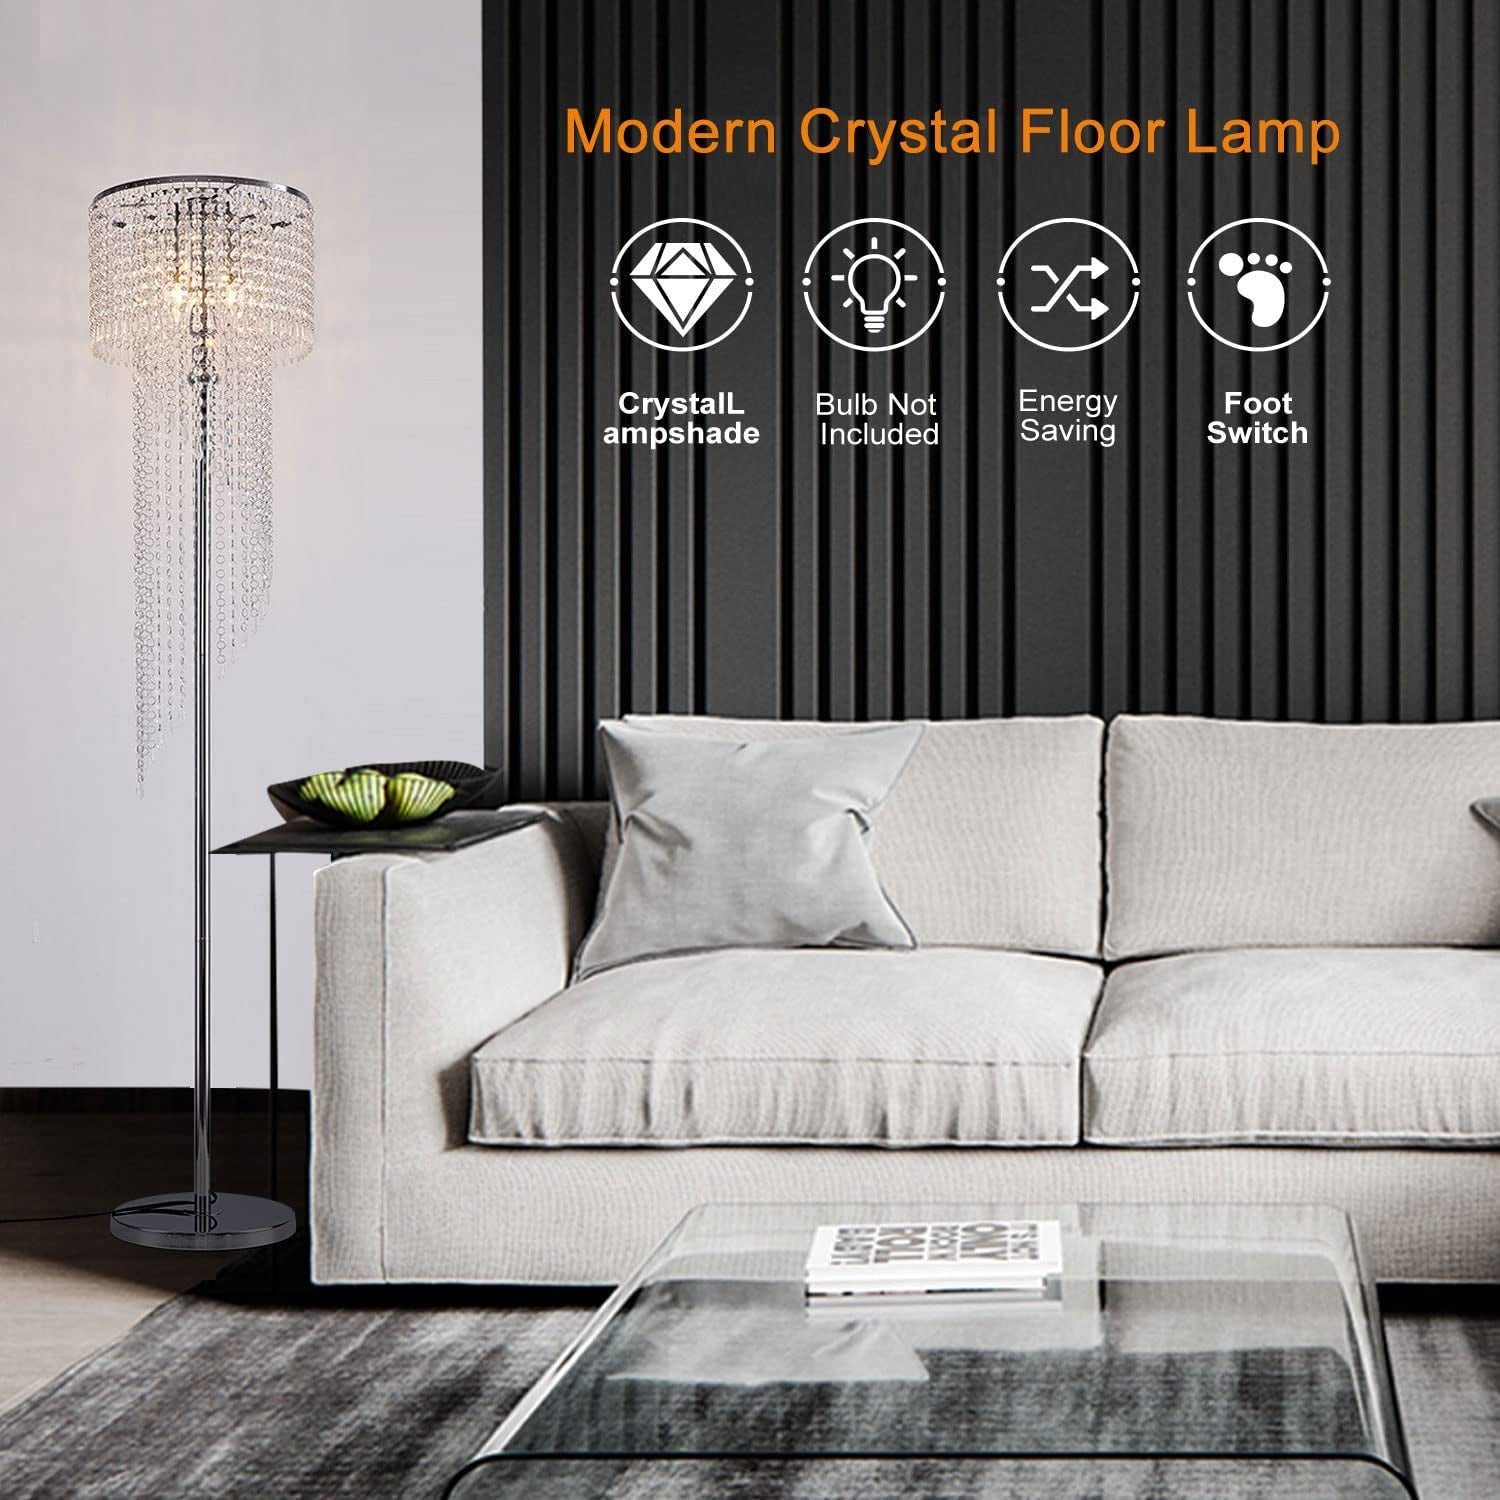 Hsyile Lighting KU300160 Modern Style Floor Lamp Chrome Finish and Plentiful Crystals,3 Lights